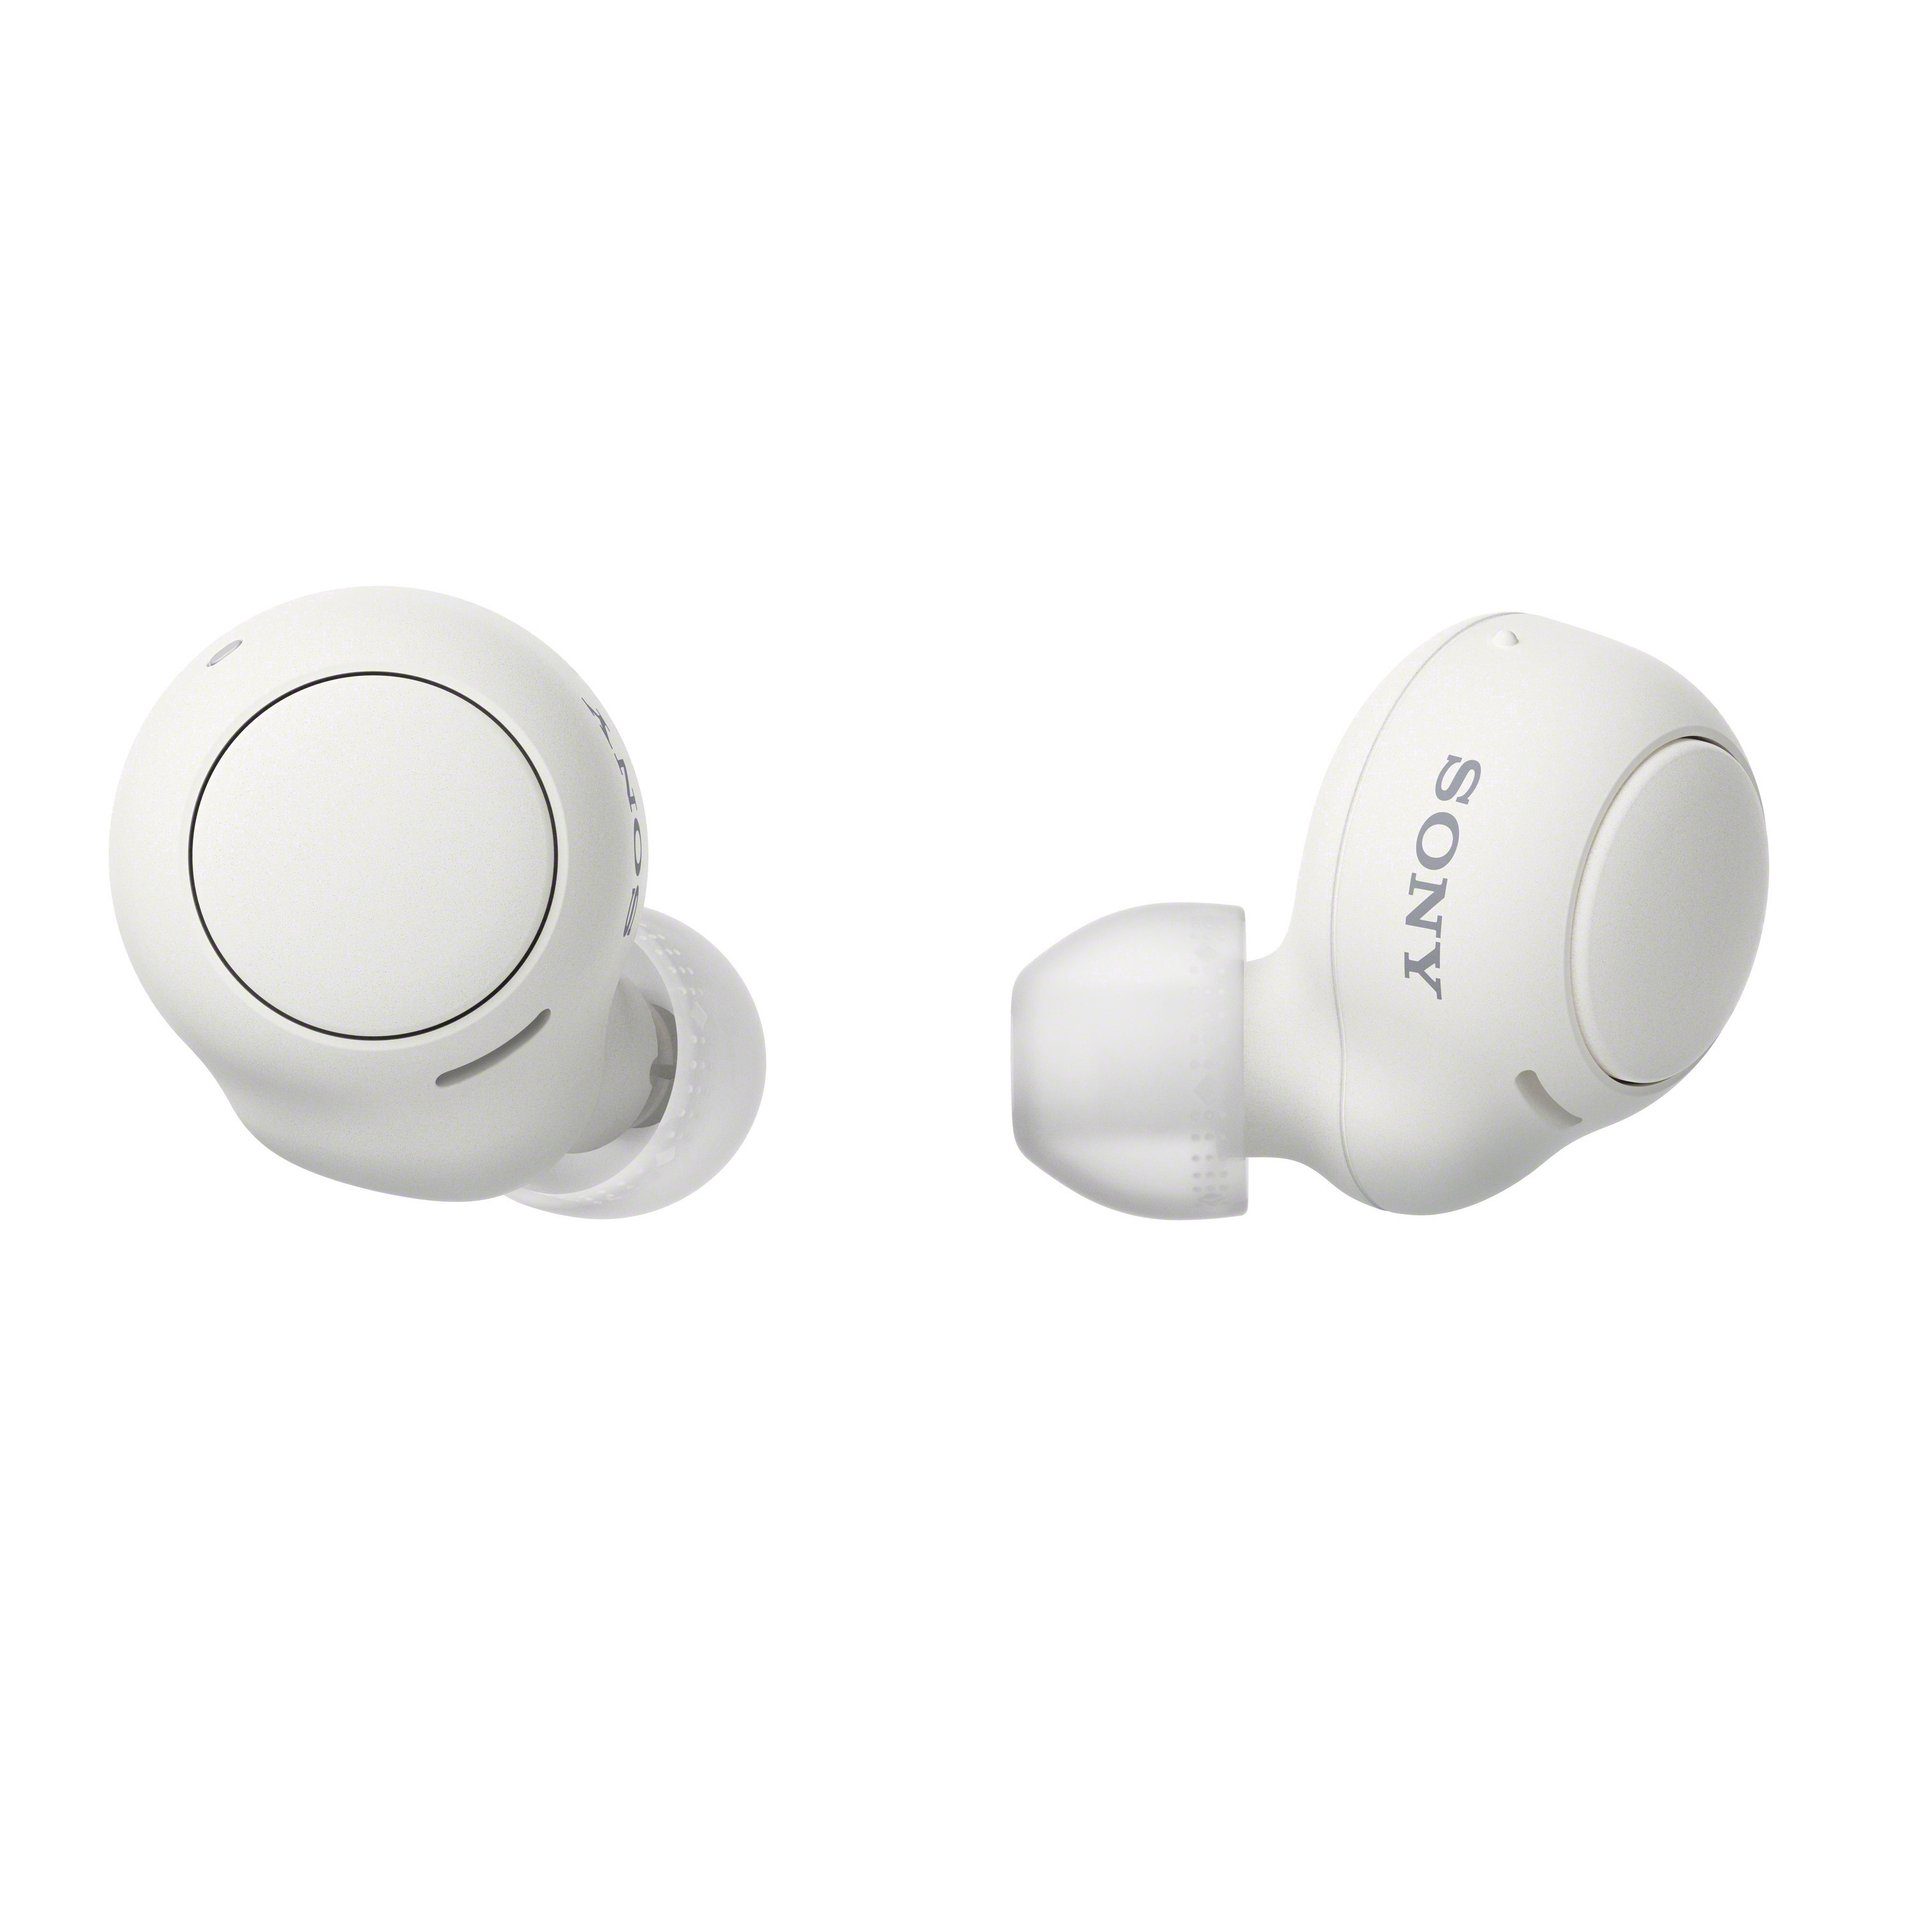 Sony Bluetooth In-Ear-Kopfhörer online kaufen | OTTO